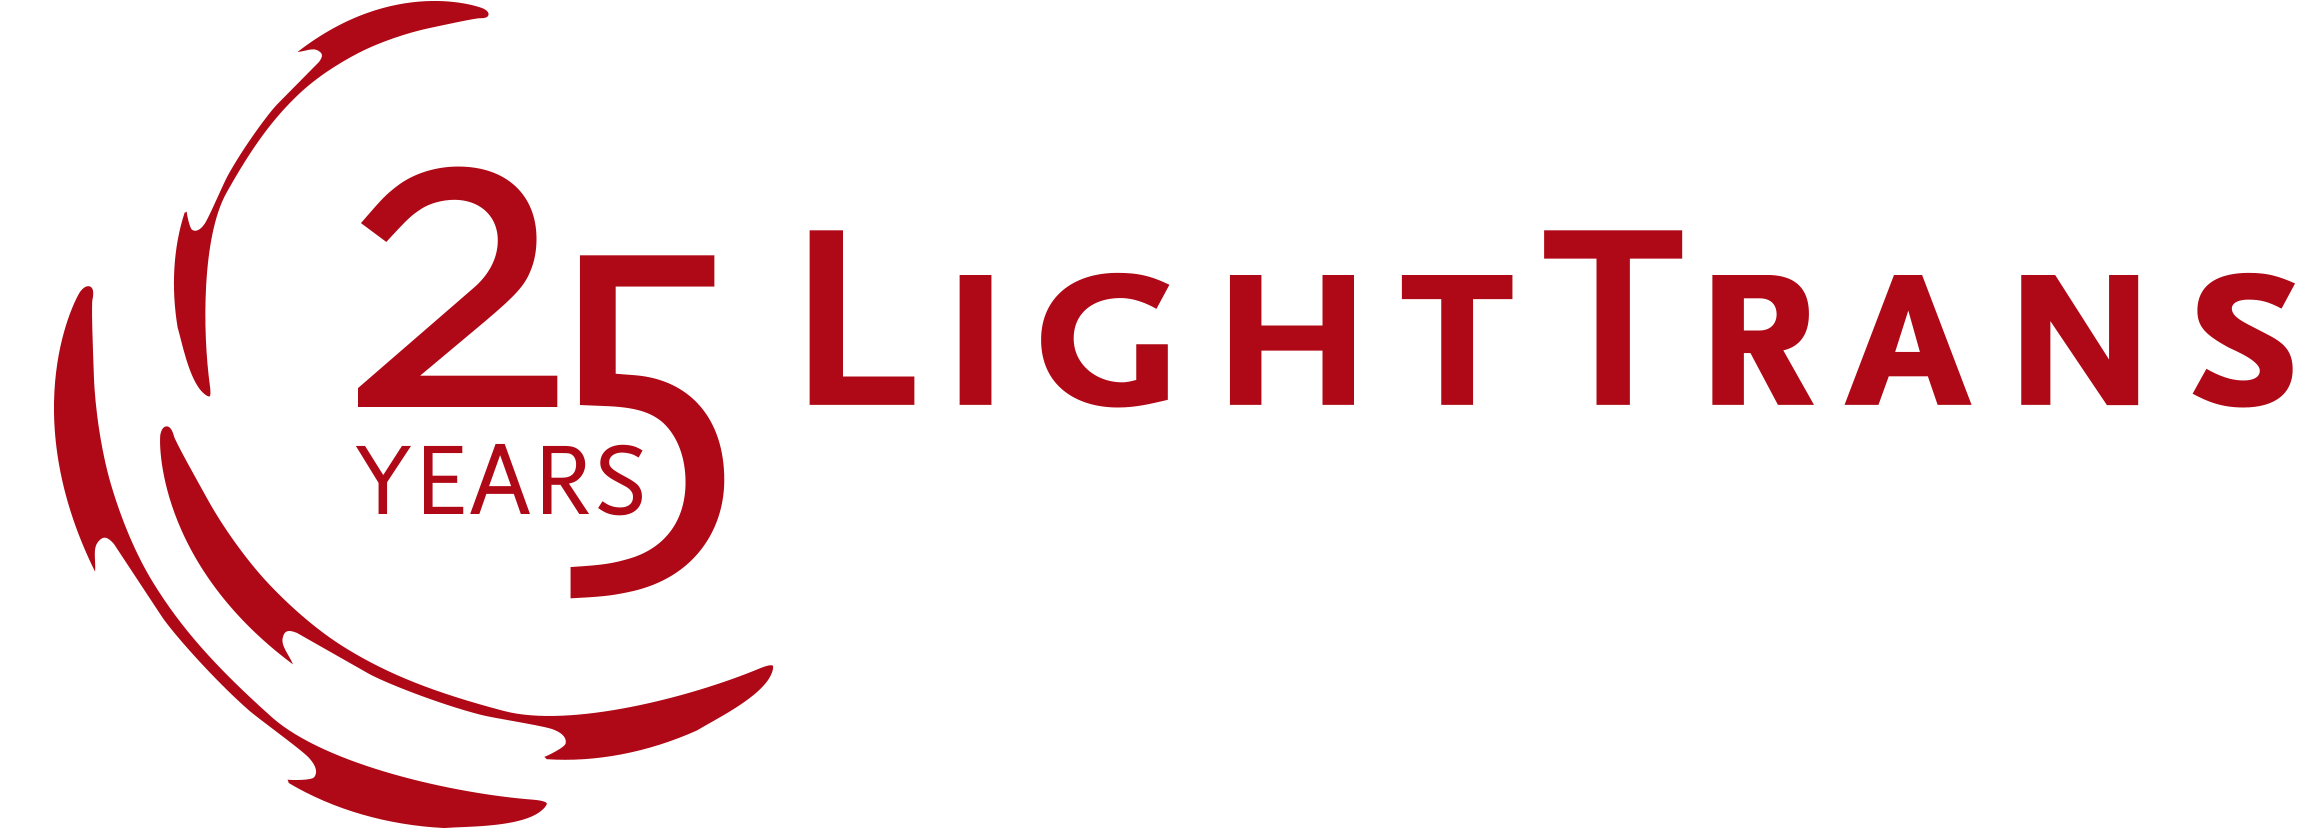 Our LightTrans Logo.